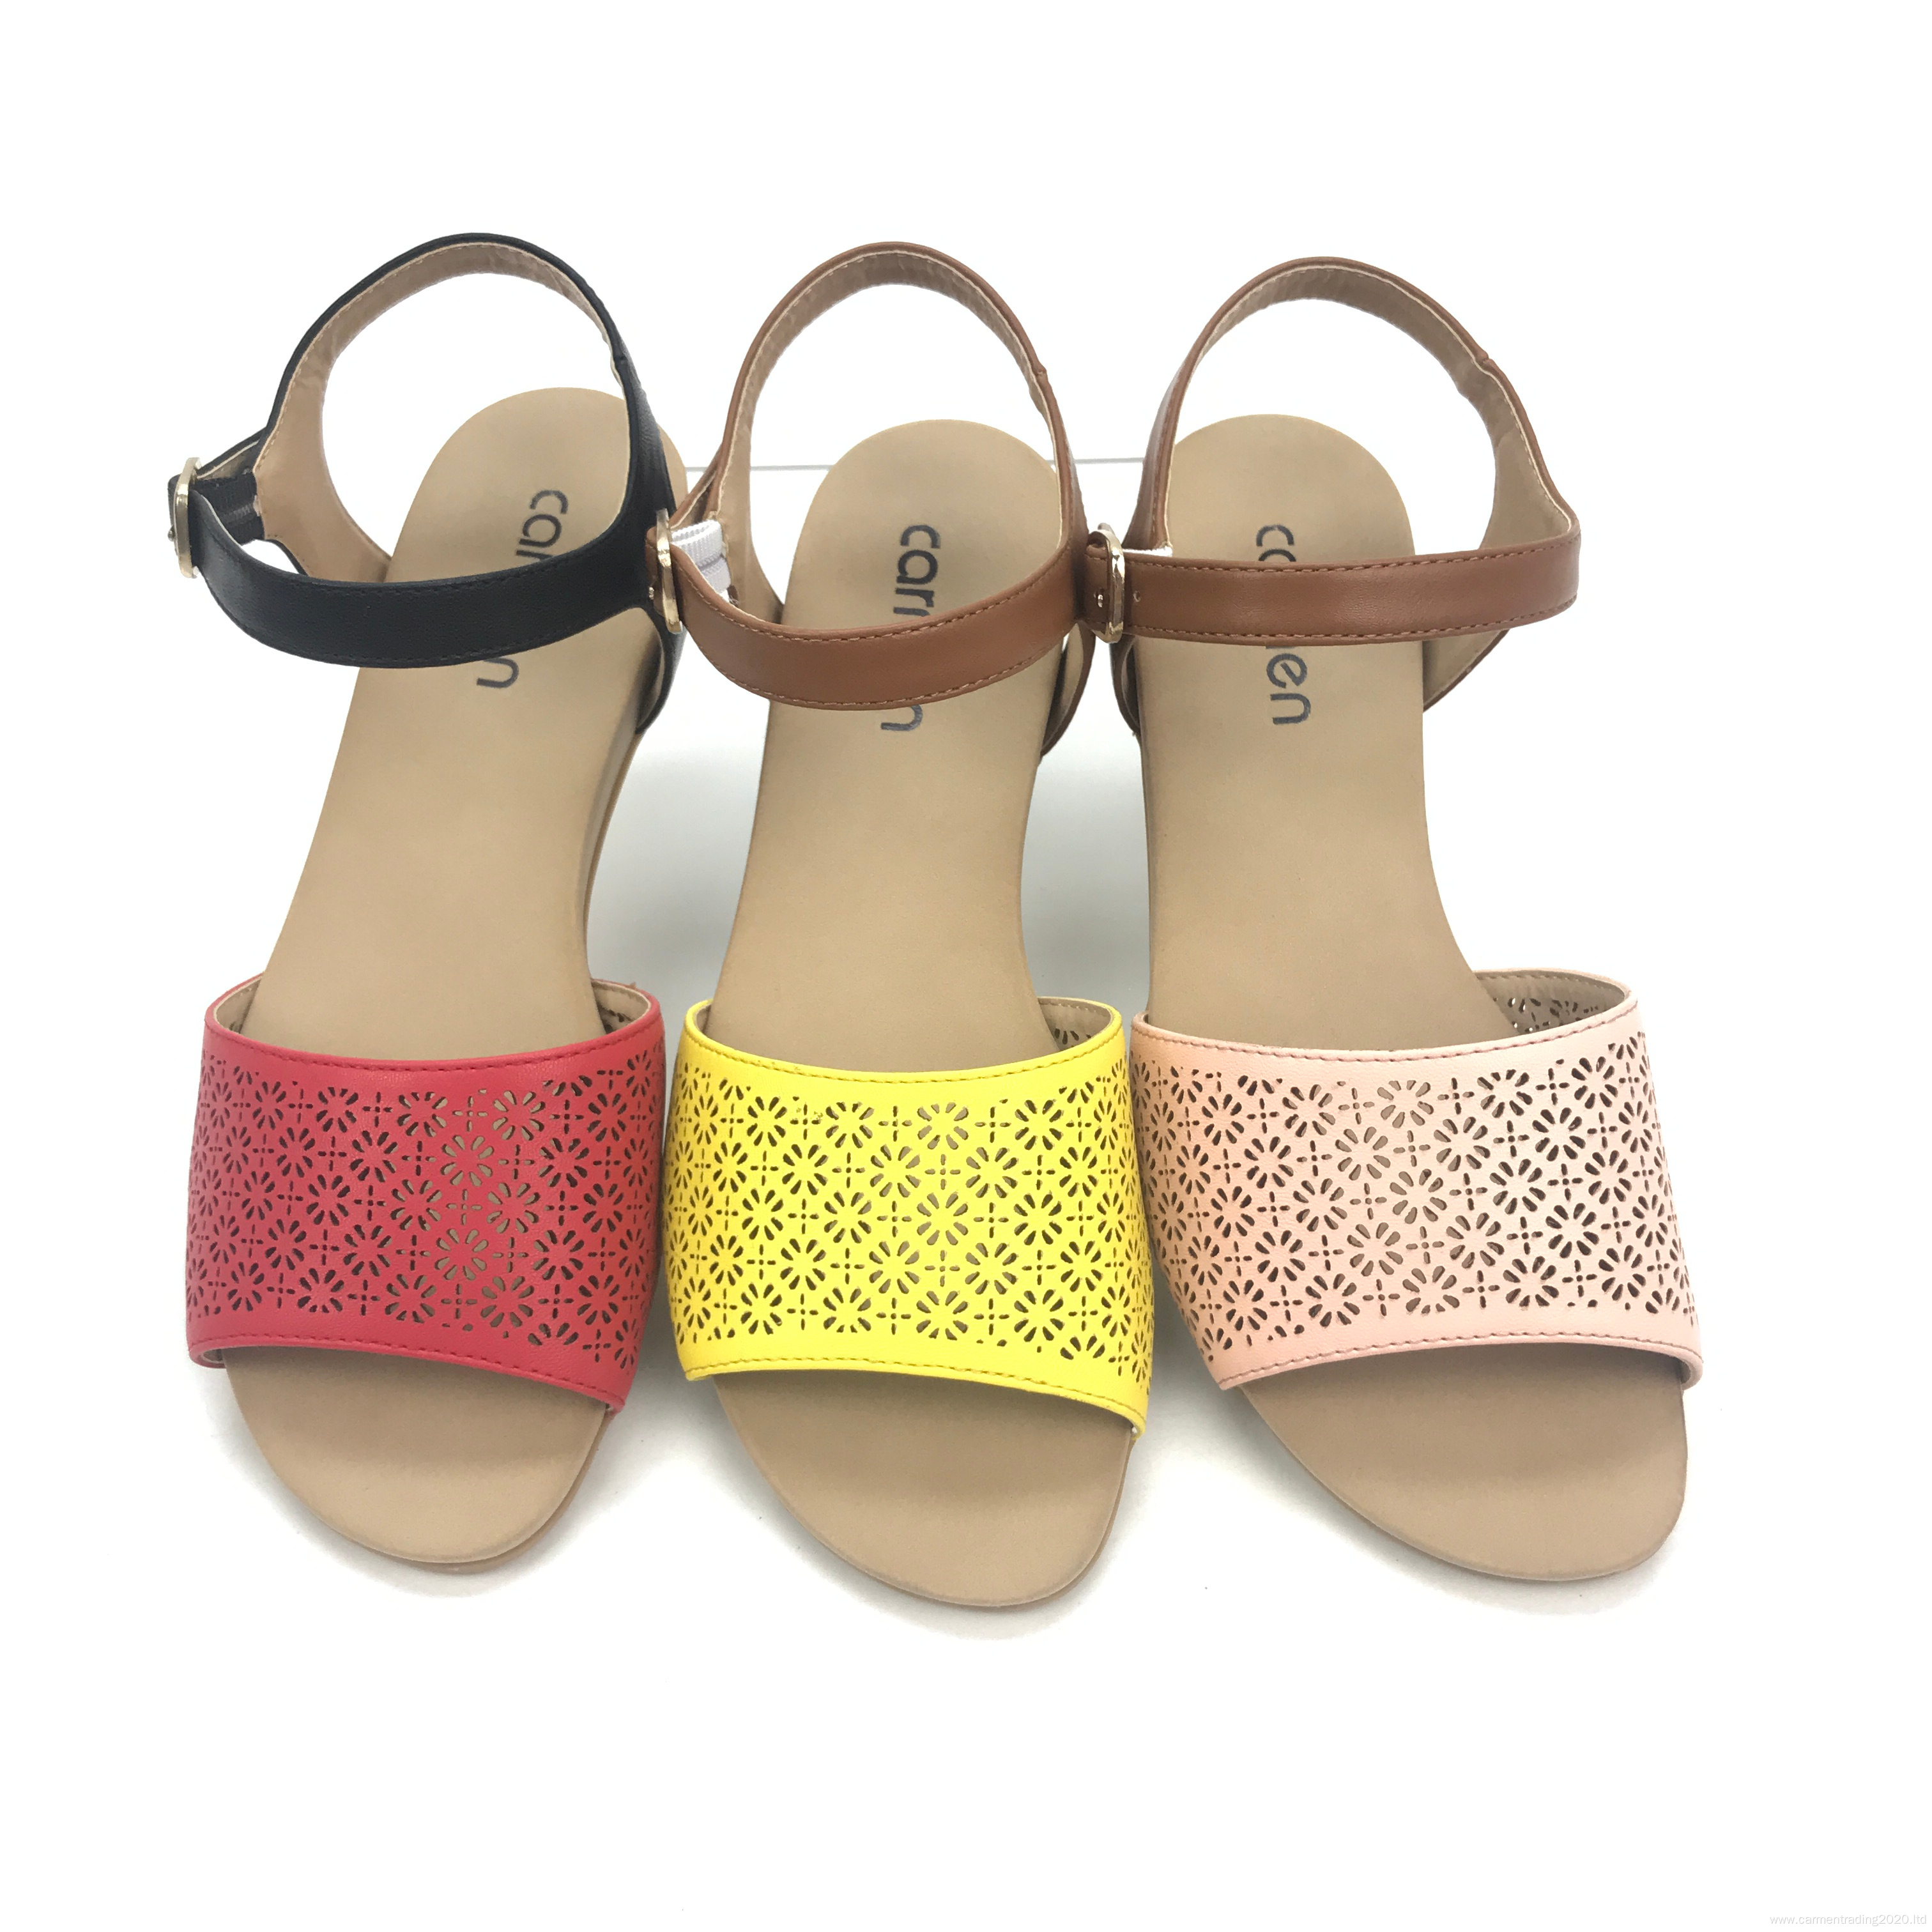 Women Sandals Comfort Flat Diarly Wear Outdoor Shoes